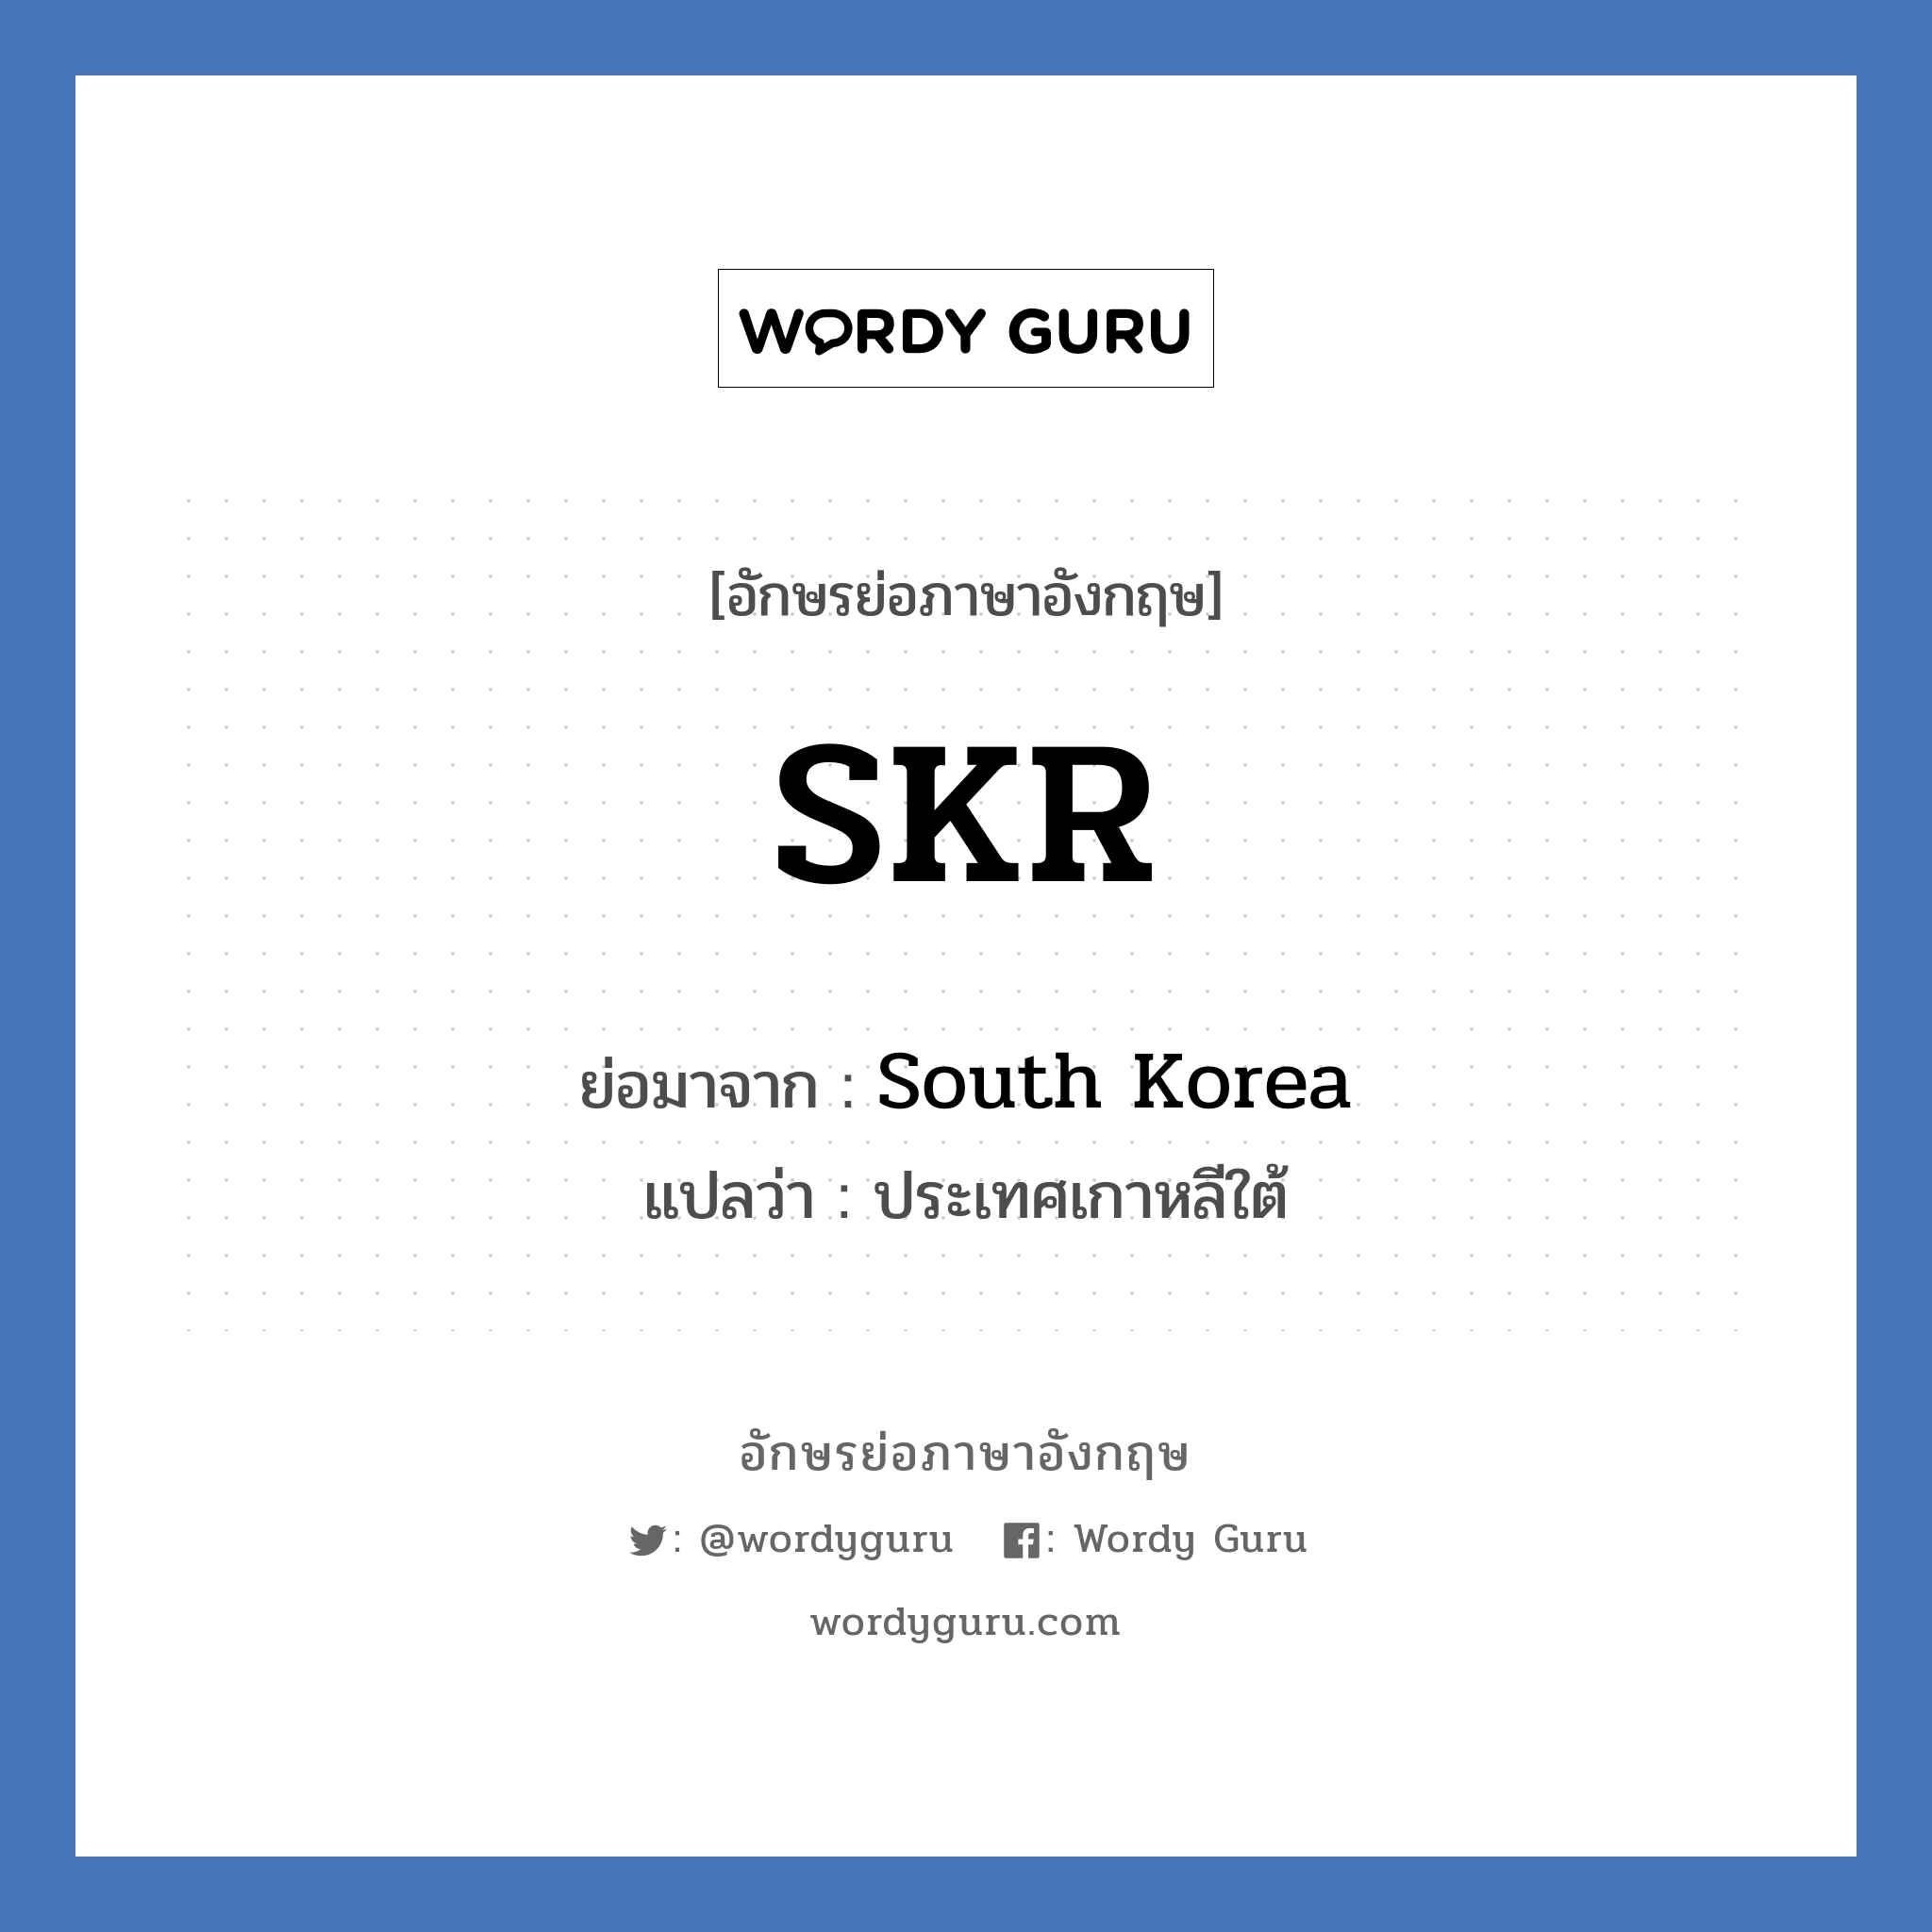 SKR ย่อมาจาก? แปลว่า?, อักษรย่อภาษาอังกฤษ SKR ย่อมาจาก South Korea แปลว่า ประเทศเกาหลีใต้